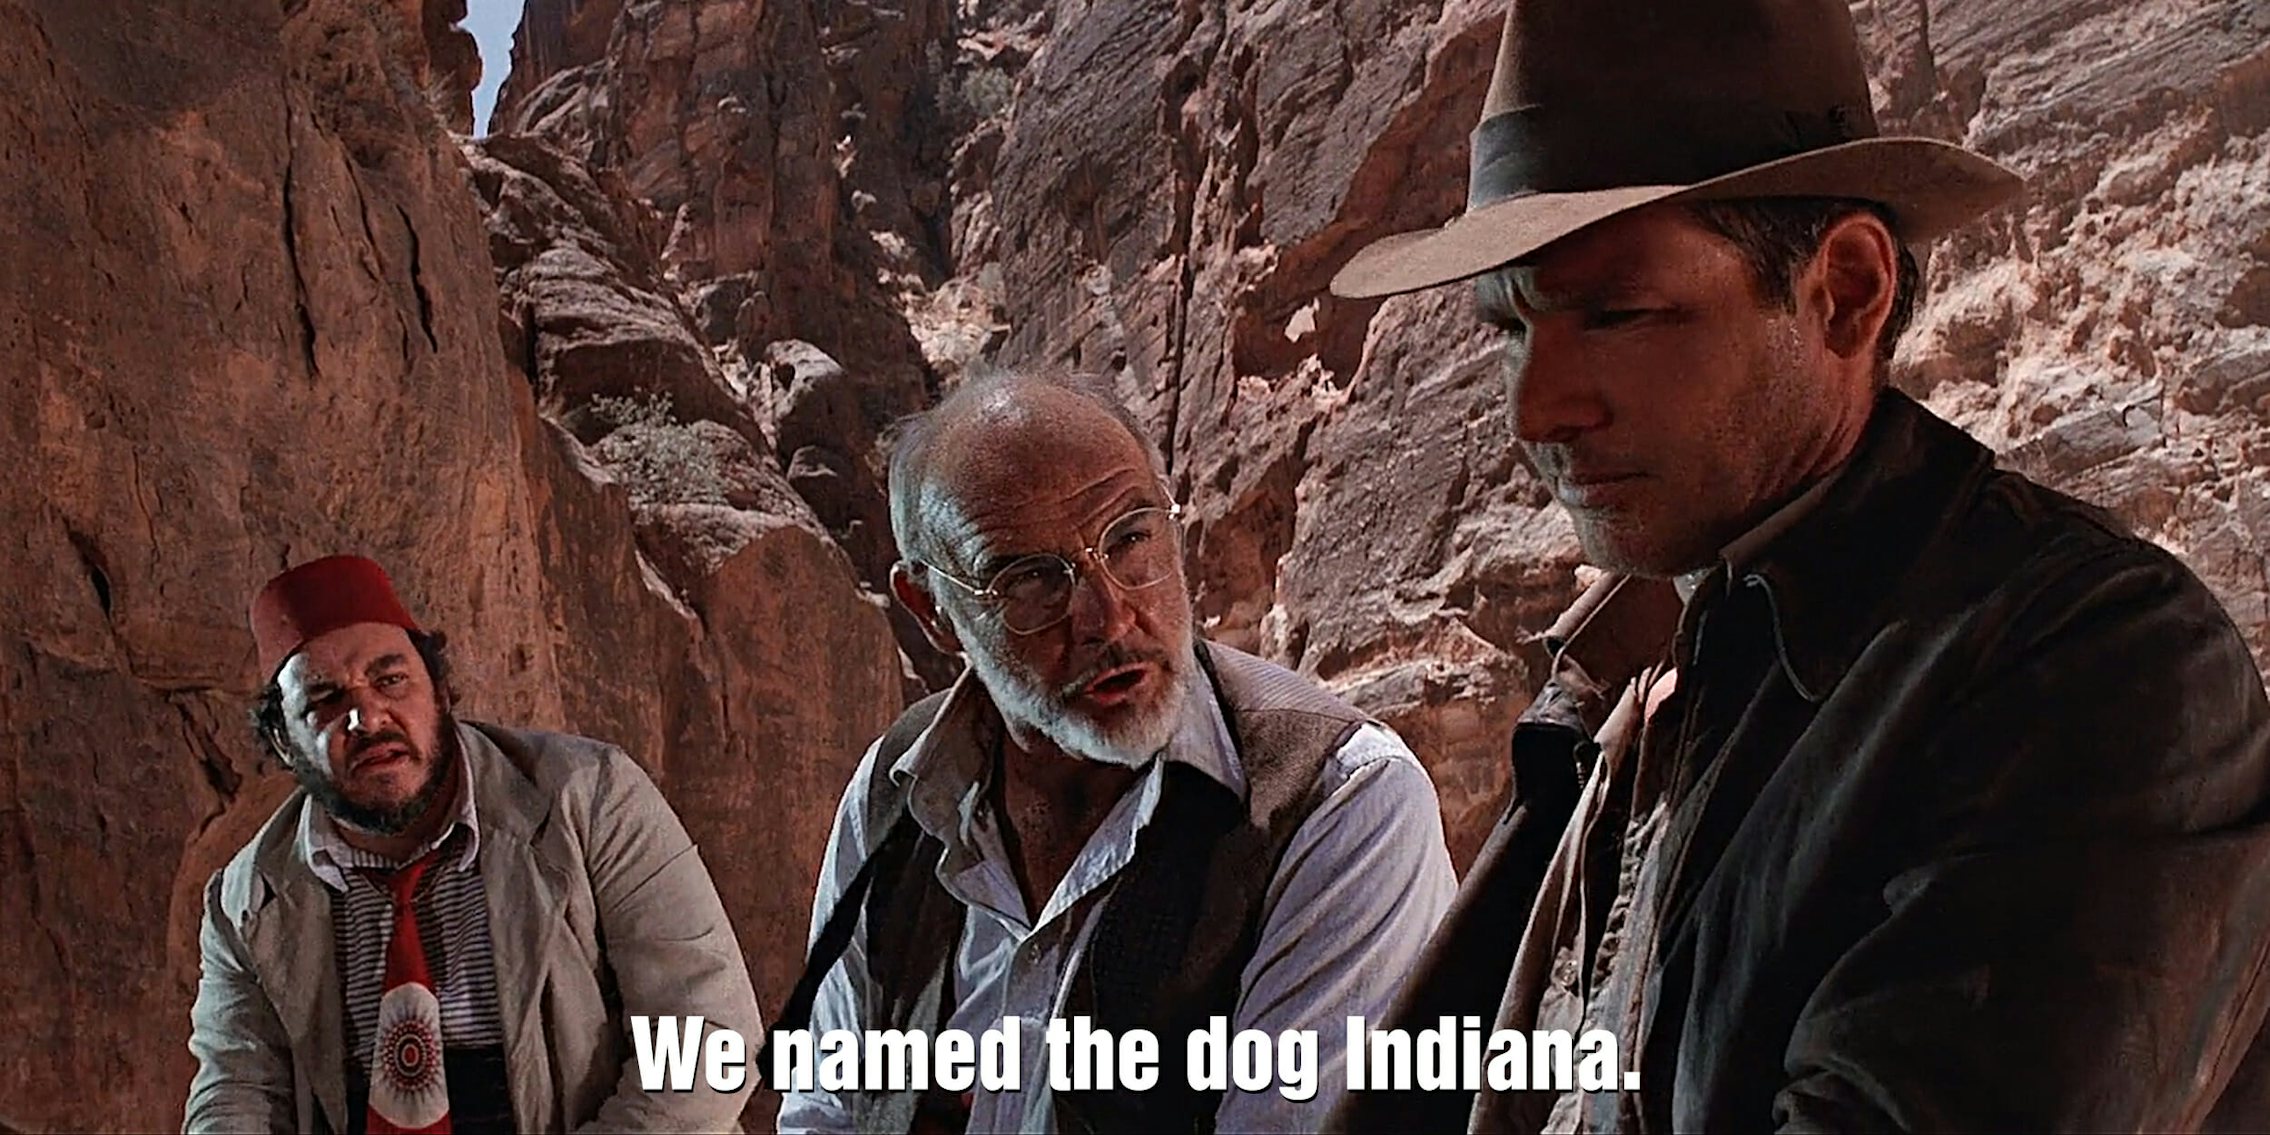 Indiana Jones with 'We named the dog Indiana.' subtitle